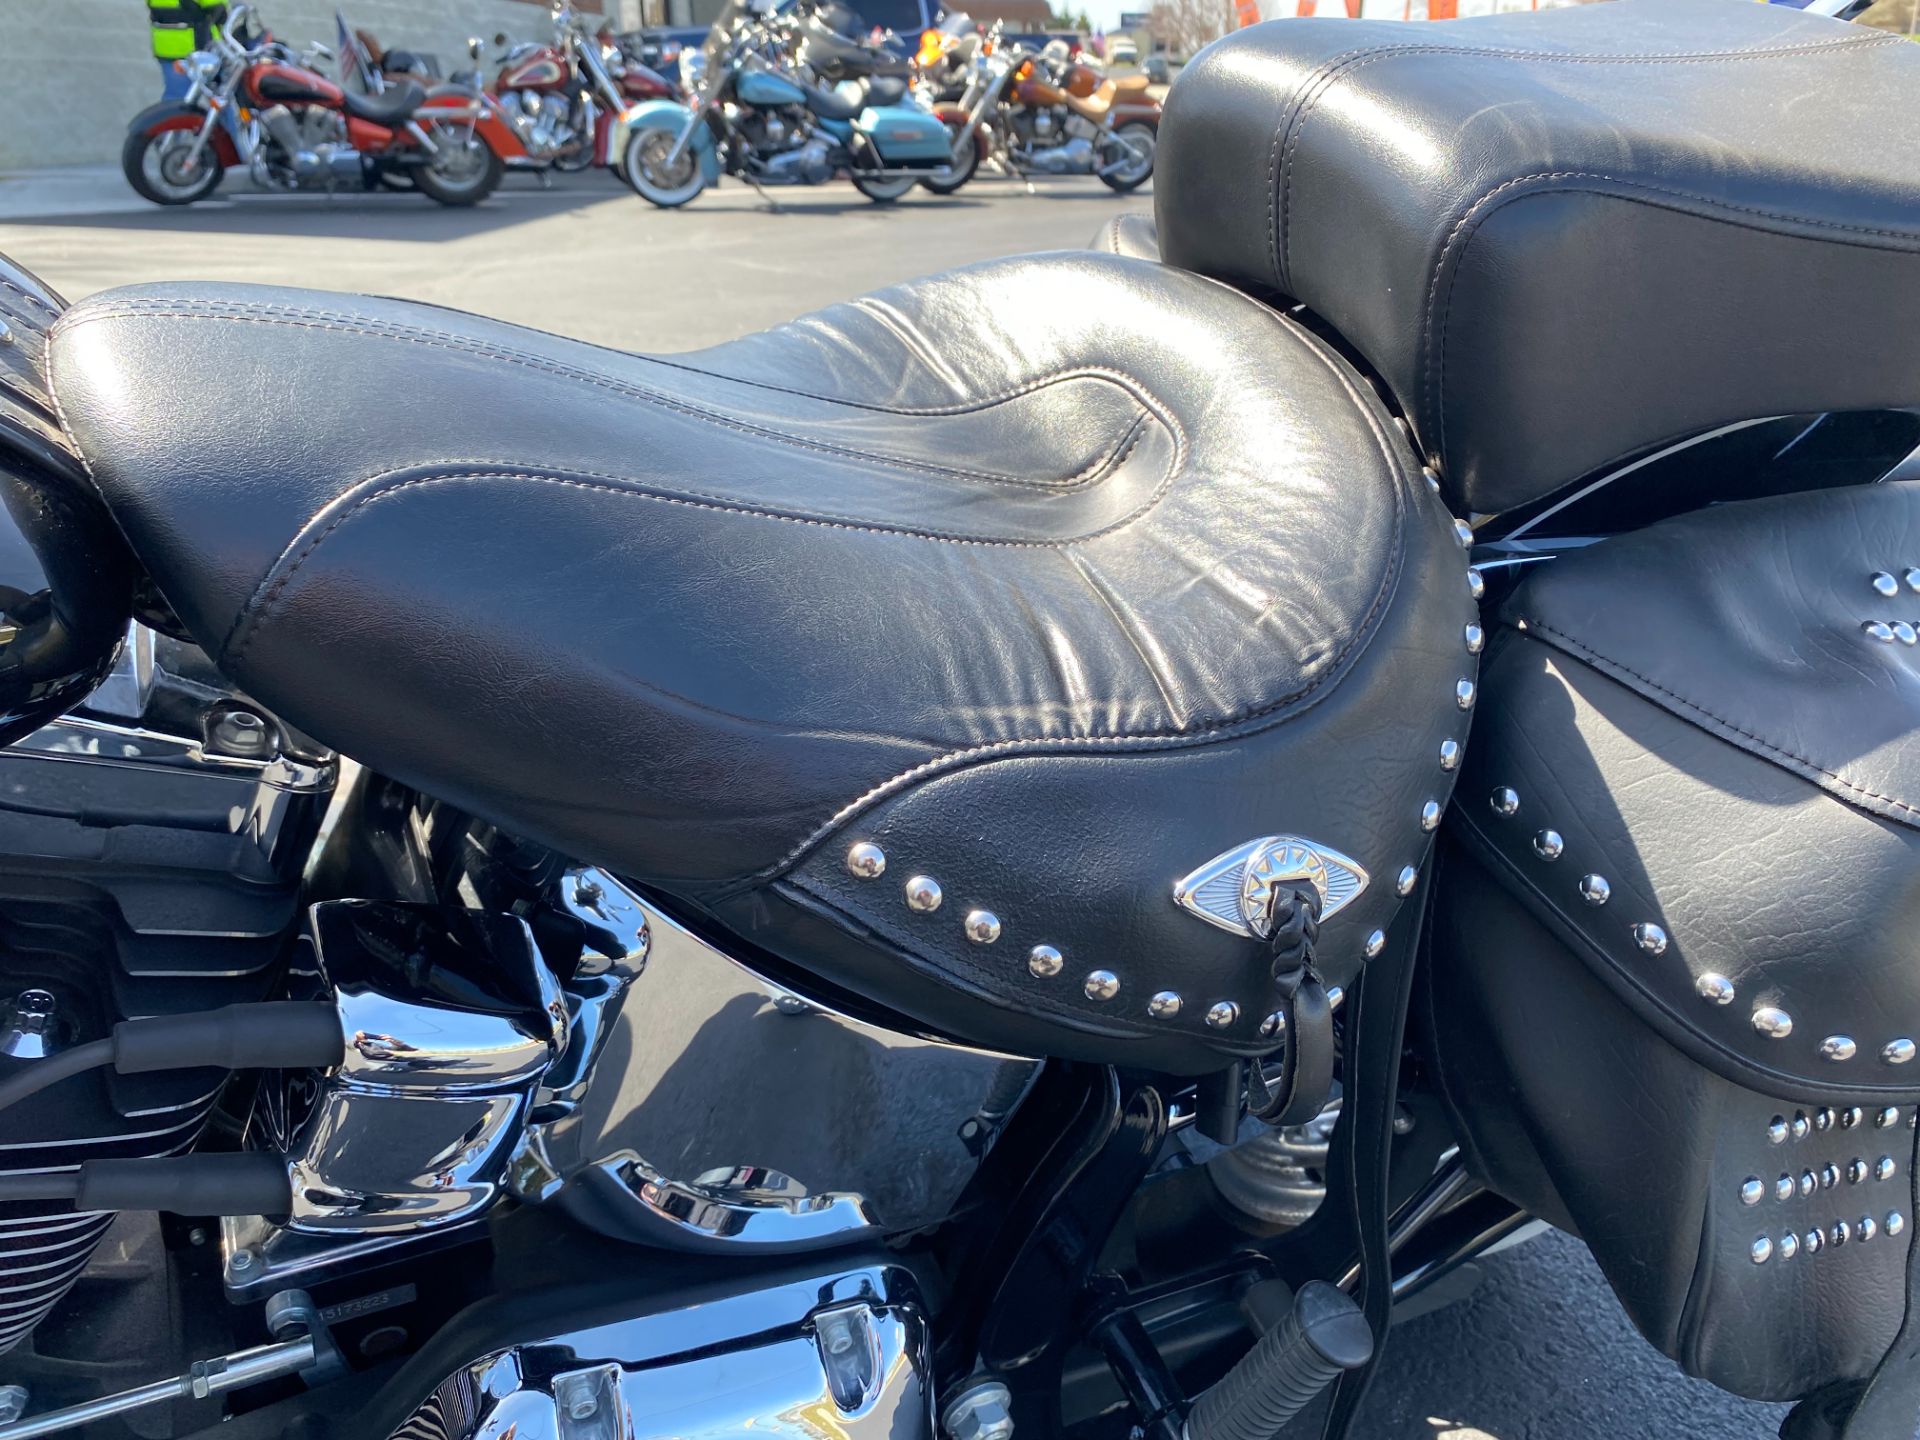 2015 Harley-Davidson Heritage Softail® Classic in Lynchburg, Virginia - Photo 24